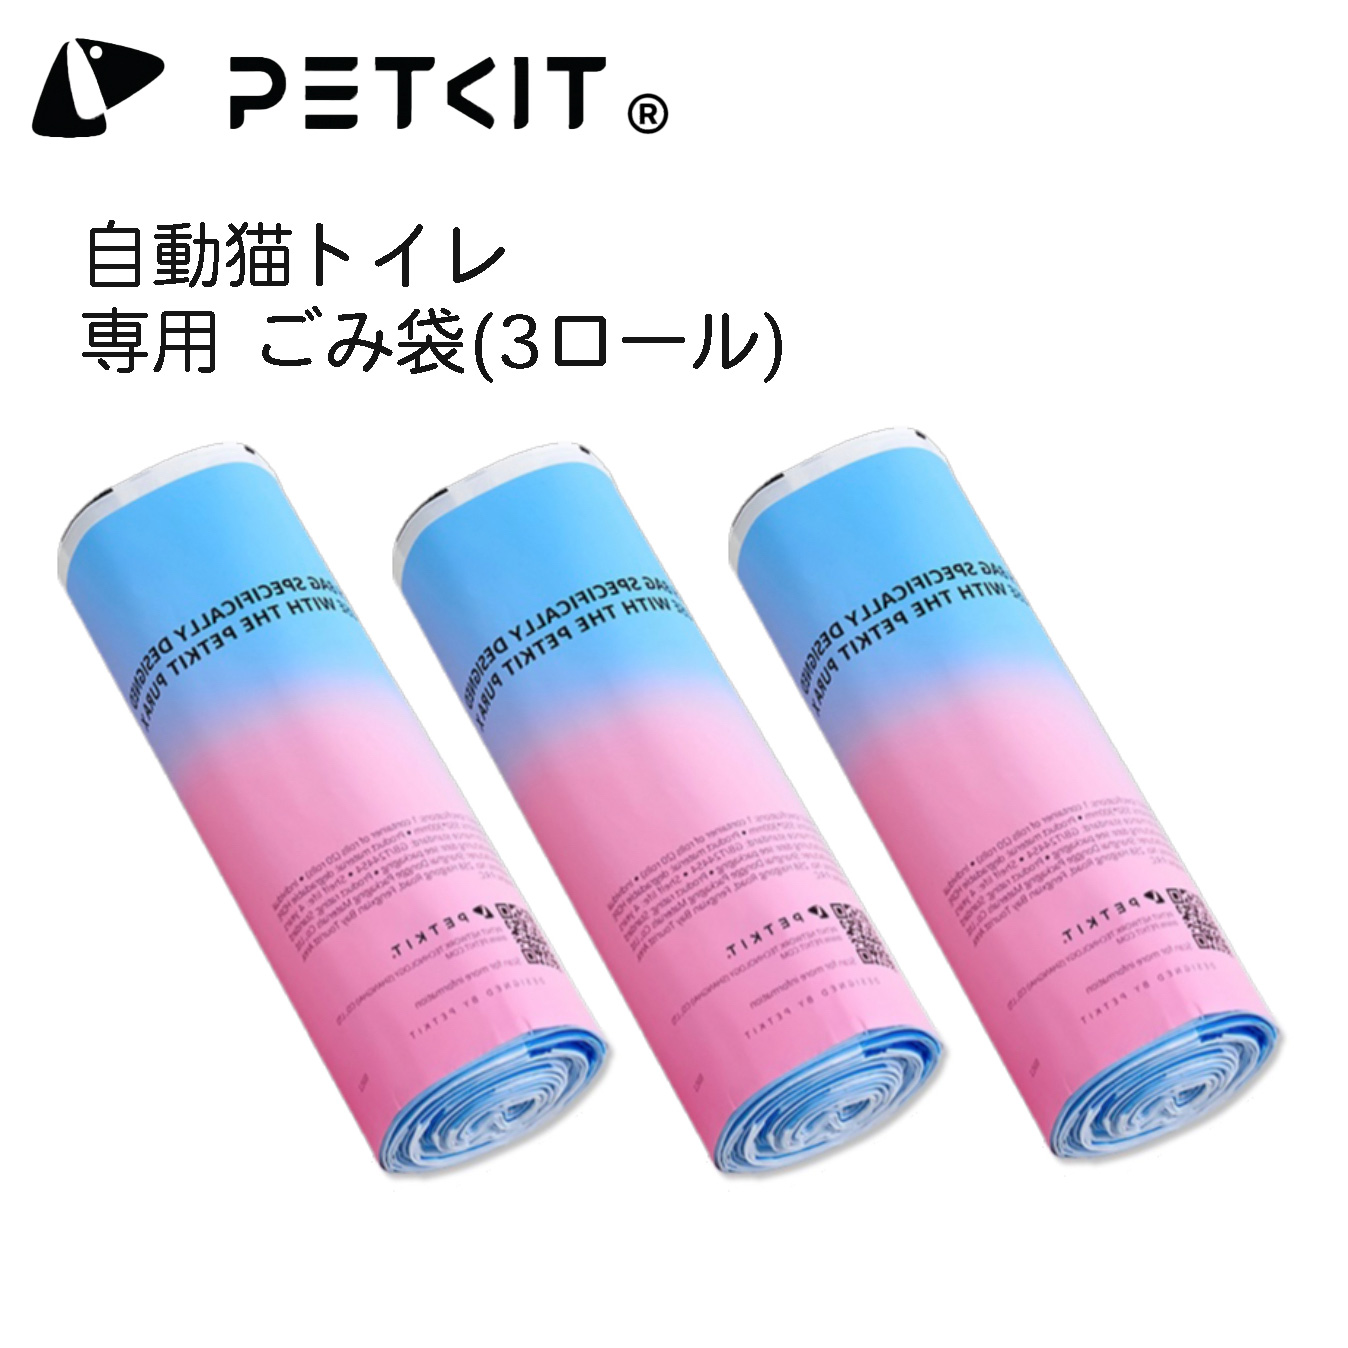 PETKIT】ごみ袋 自動ネコトイレ PETKIT PURA専用3ロールセット (20枚×3